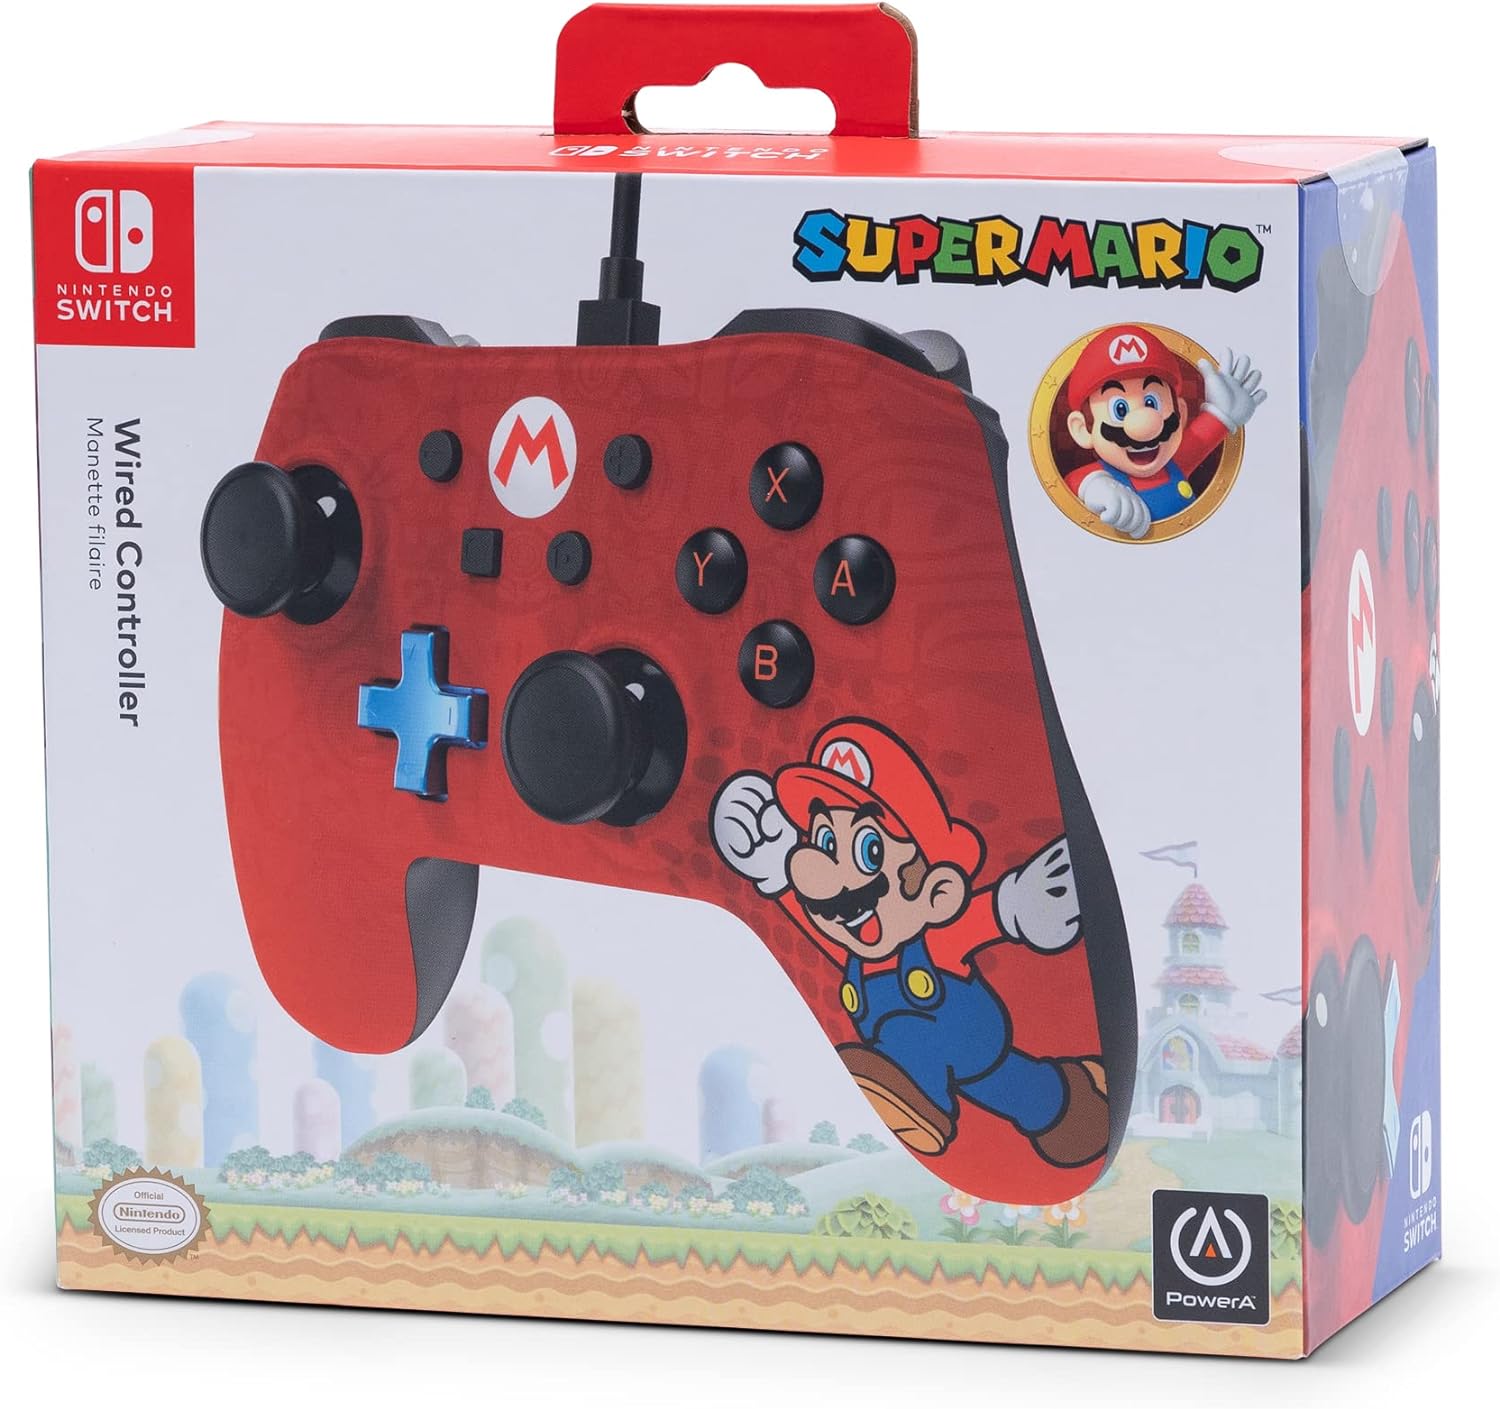 Control Pro Alambrico Nintendo Switch – Super Mario Edition